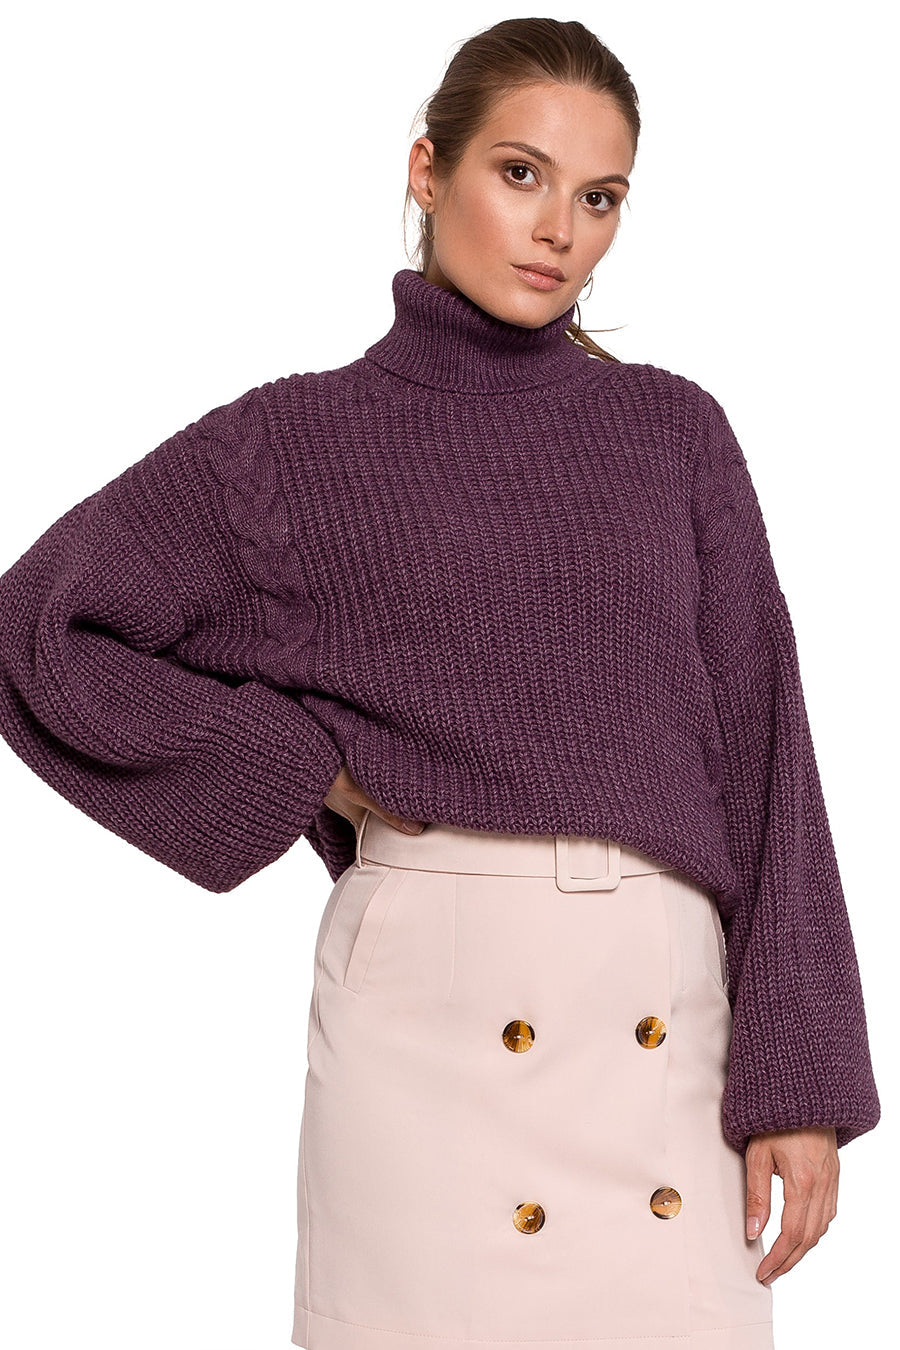 Дамски пуловер Chimena, Лилав 3